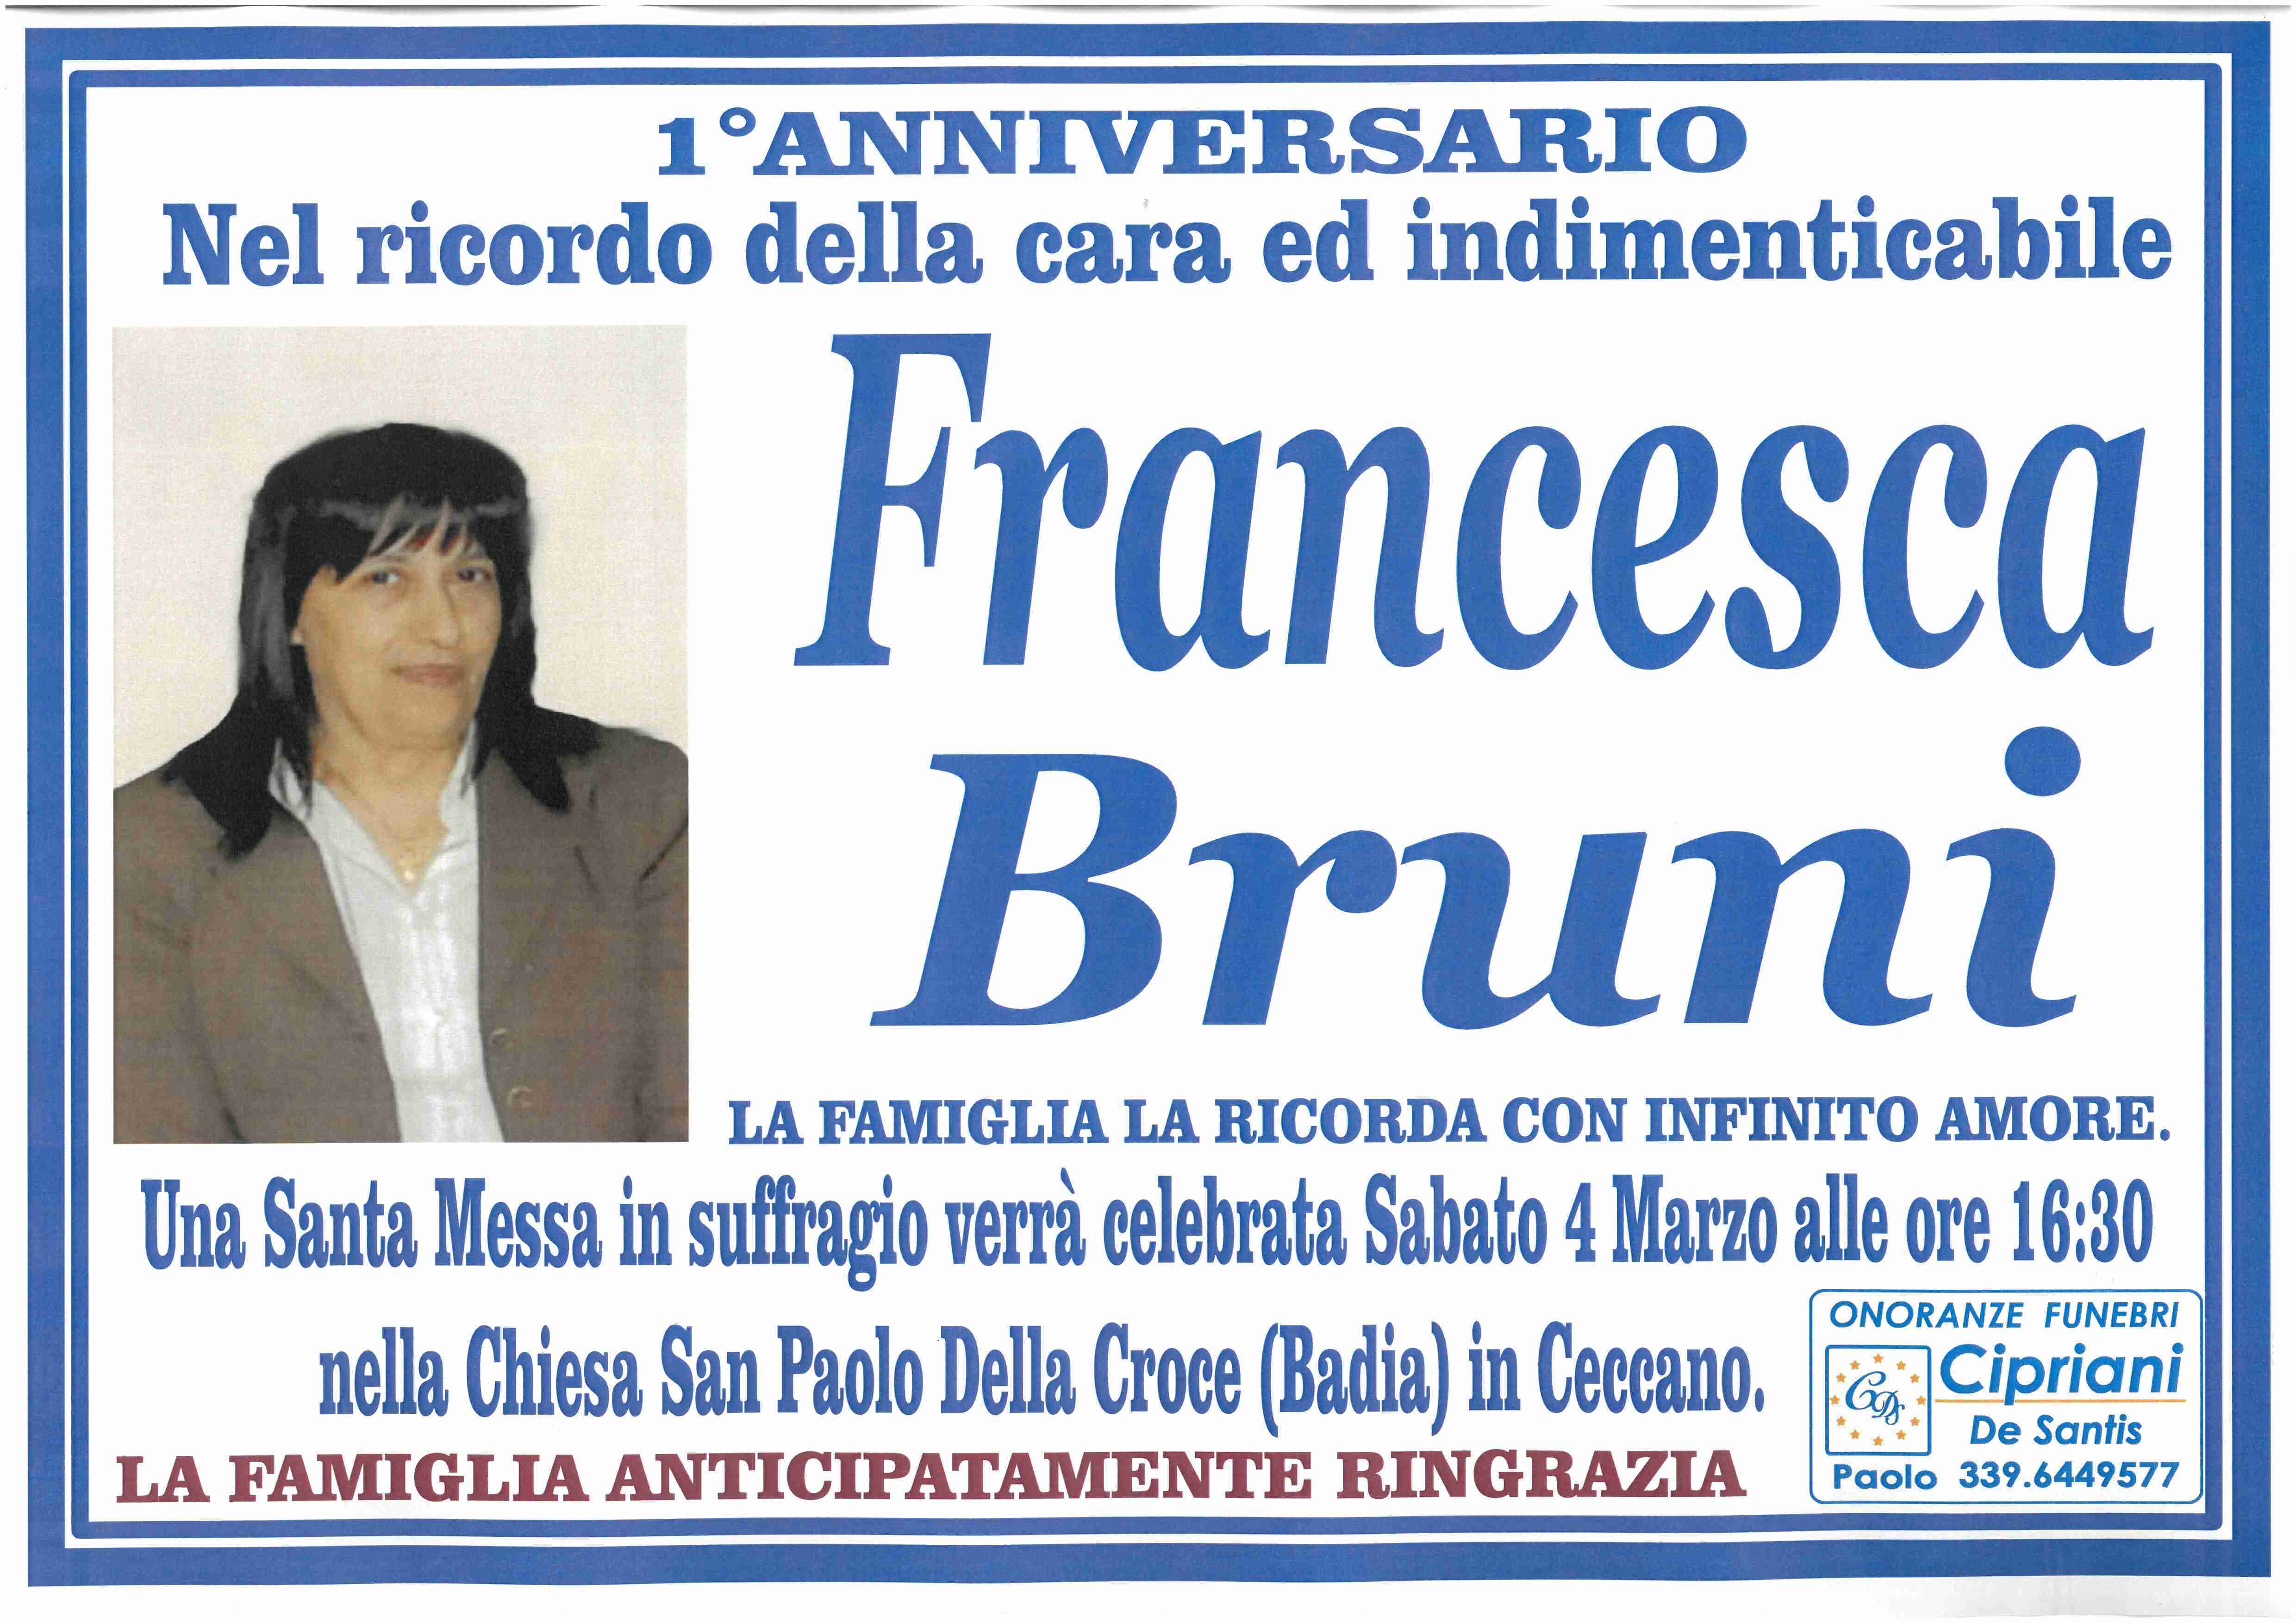 Francesca Bruni